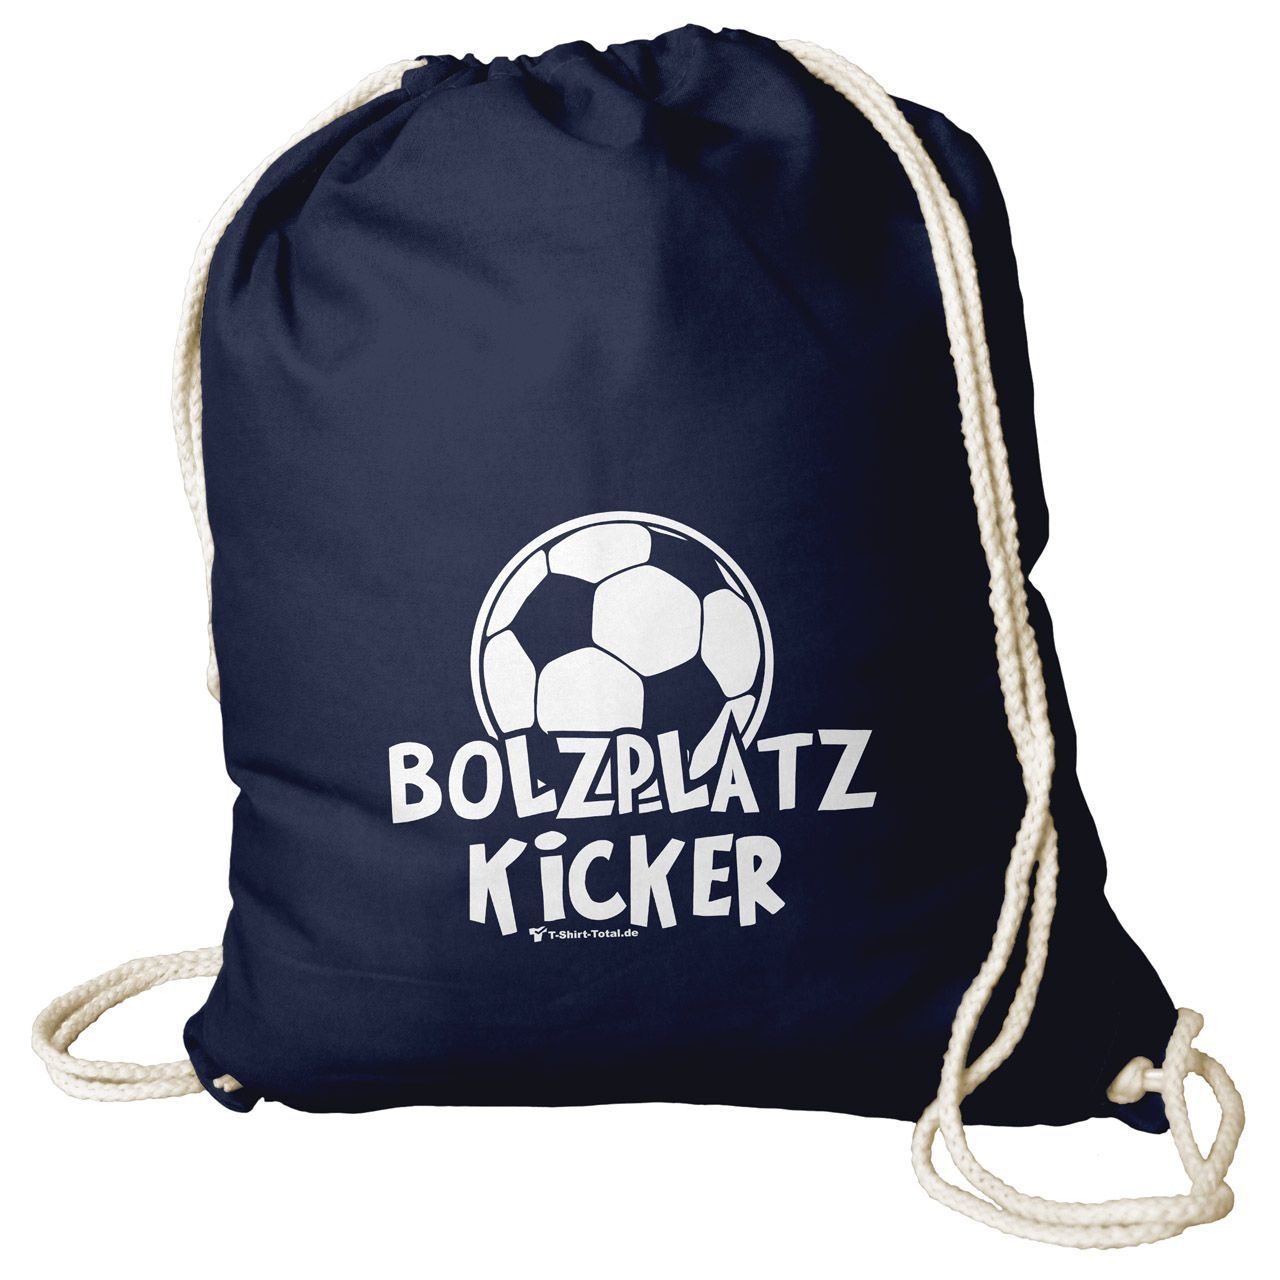 Bolzplatz Kicker Rucksack Beutel navy